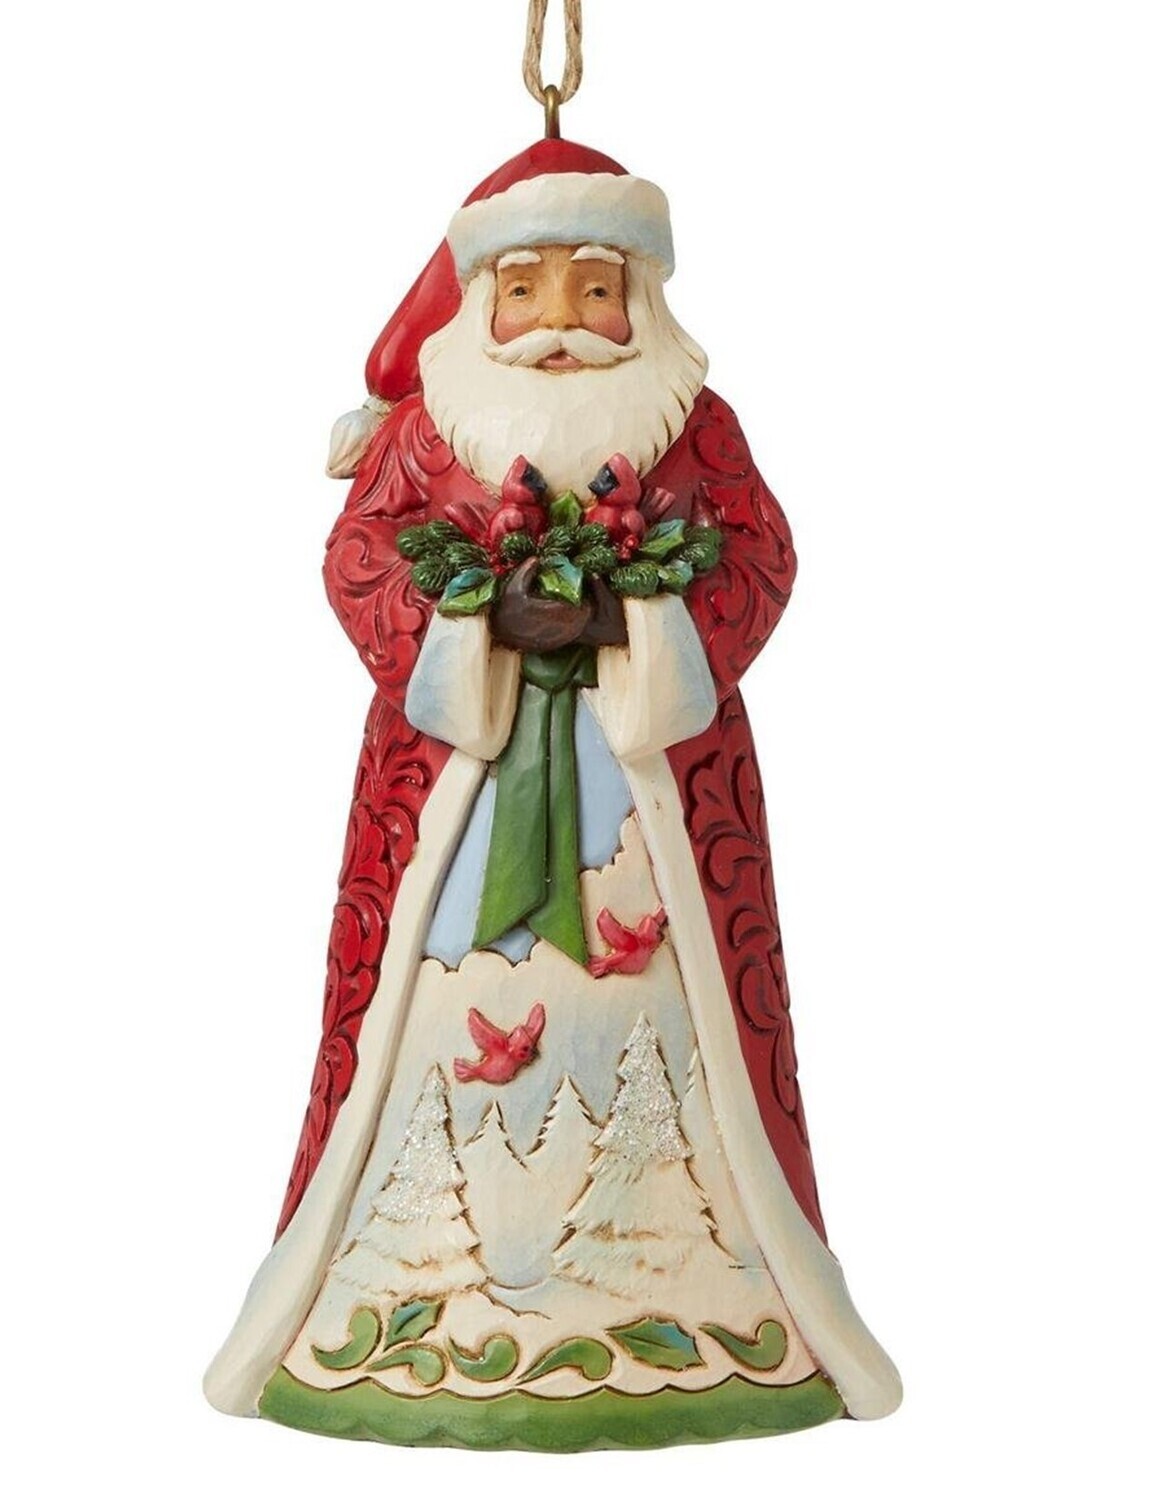 Jim Shore Heartwood Creek "Santa Holding Cardinals" Ornament (6009693)